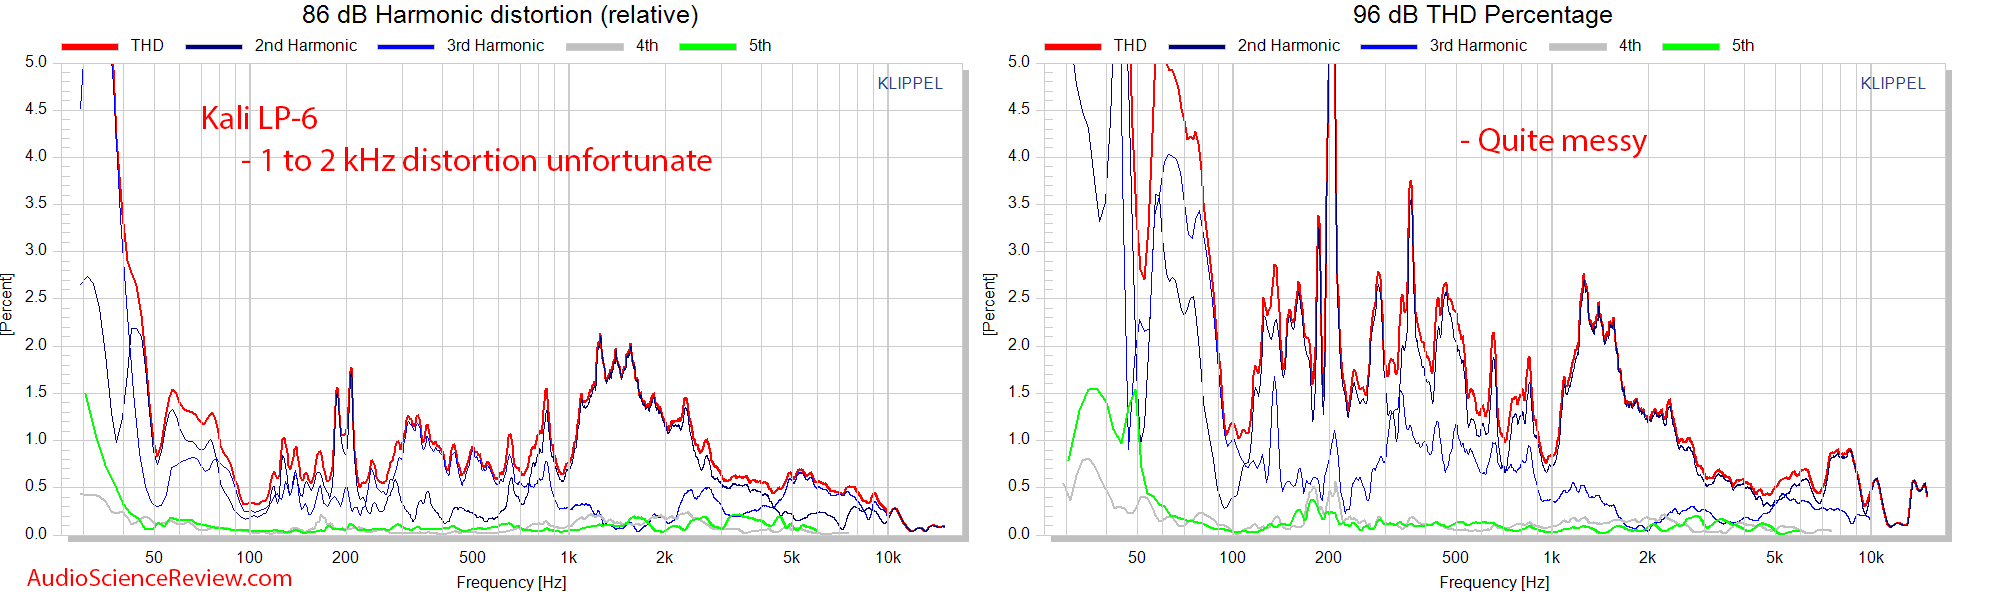 Kali LP-6 Measurements relative THD distortion.png